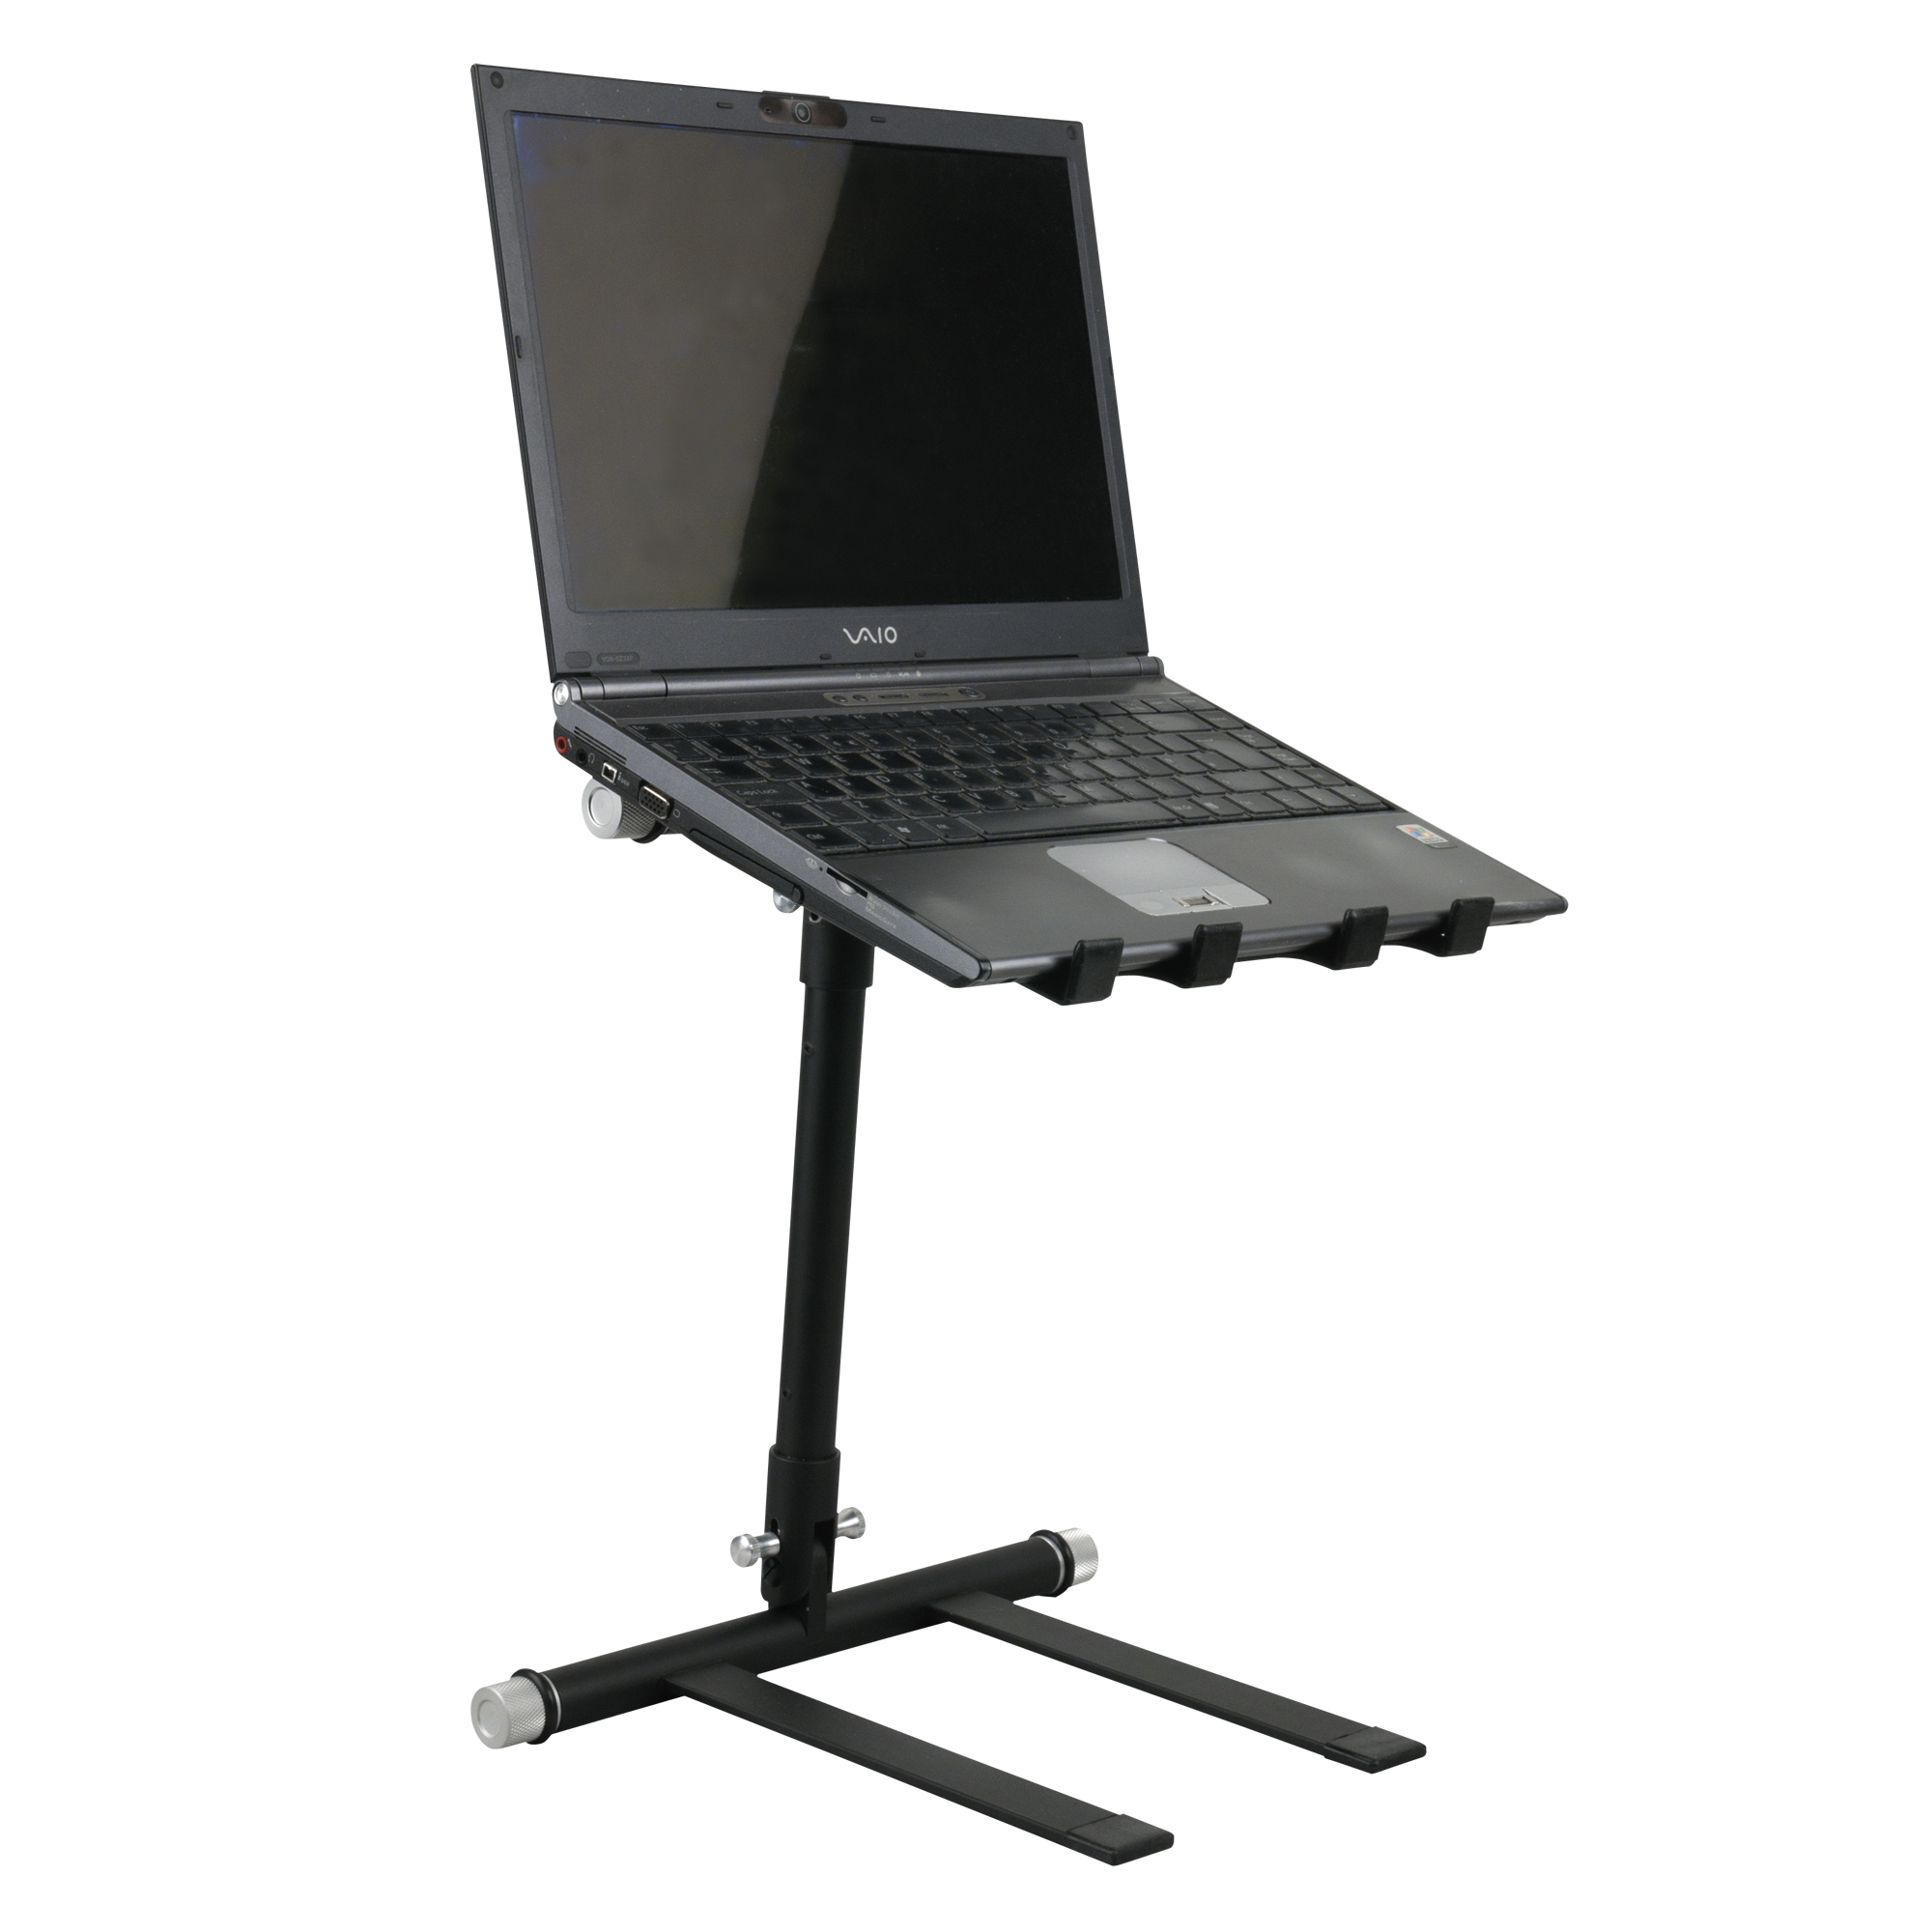 Showgear Foldable Laptop Stand 